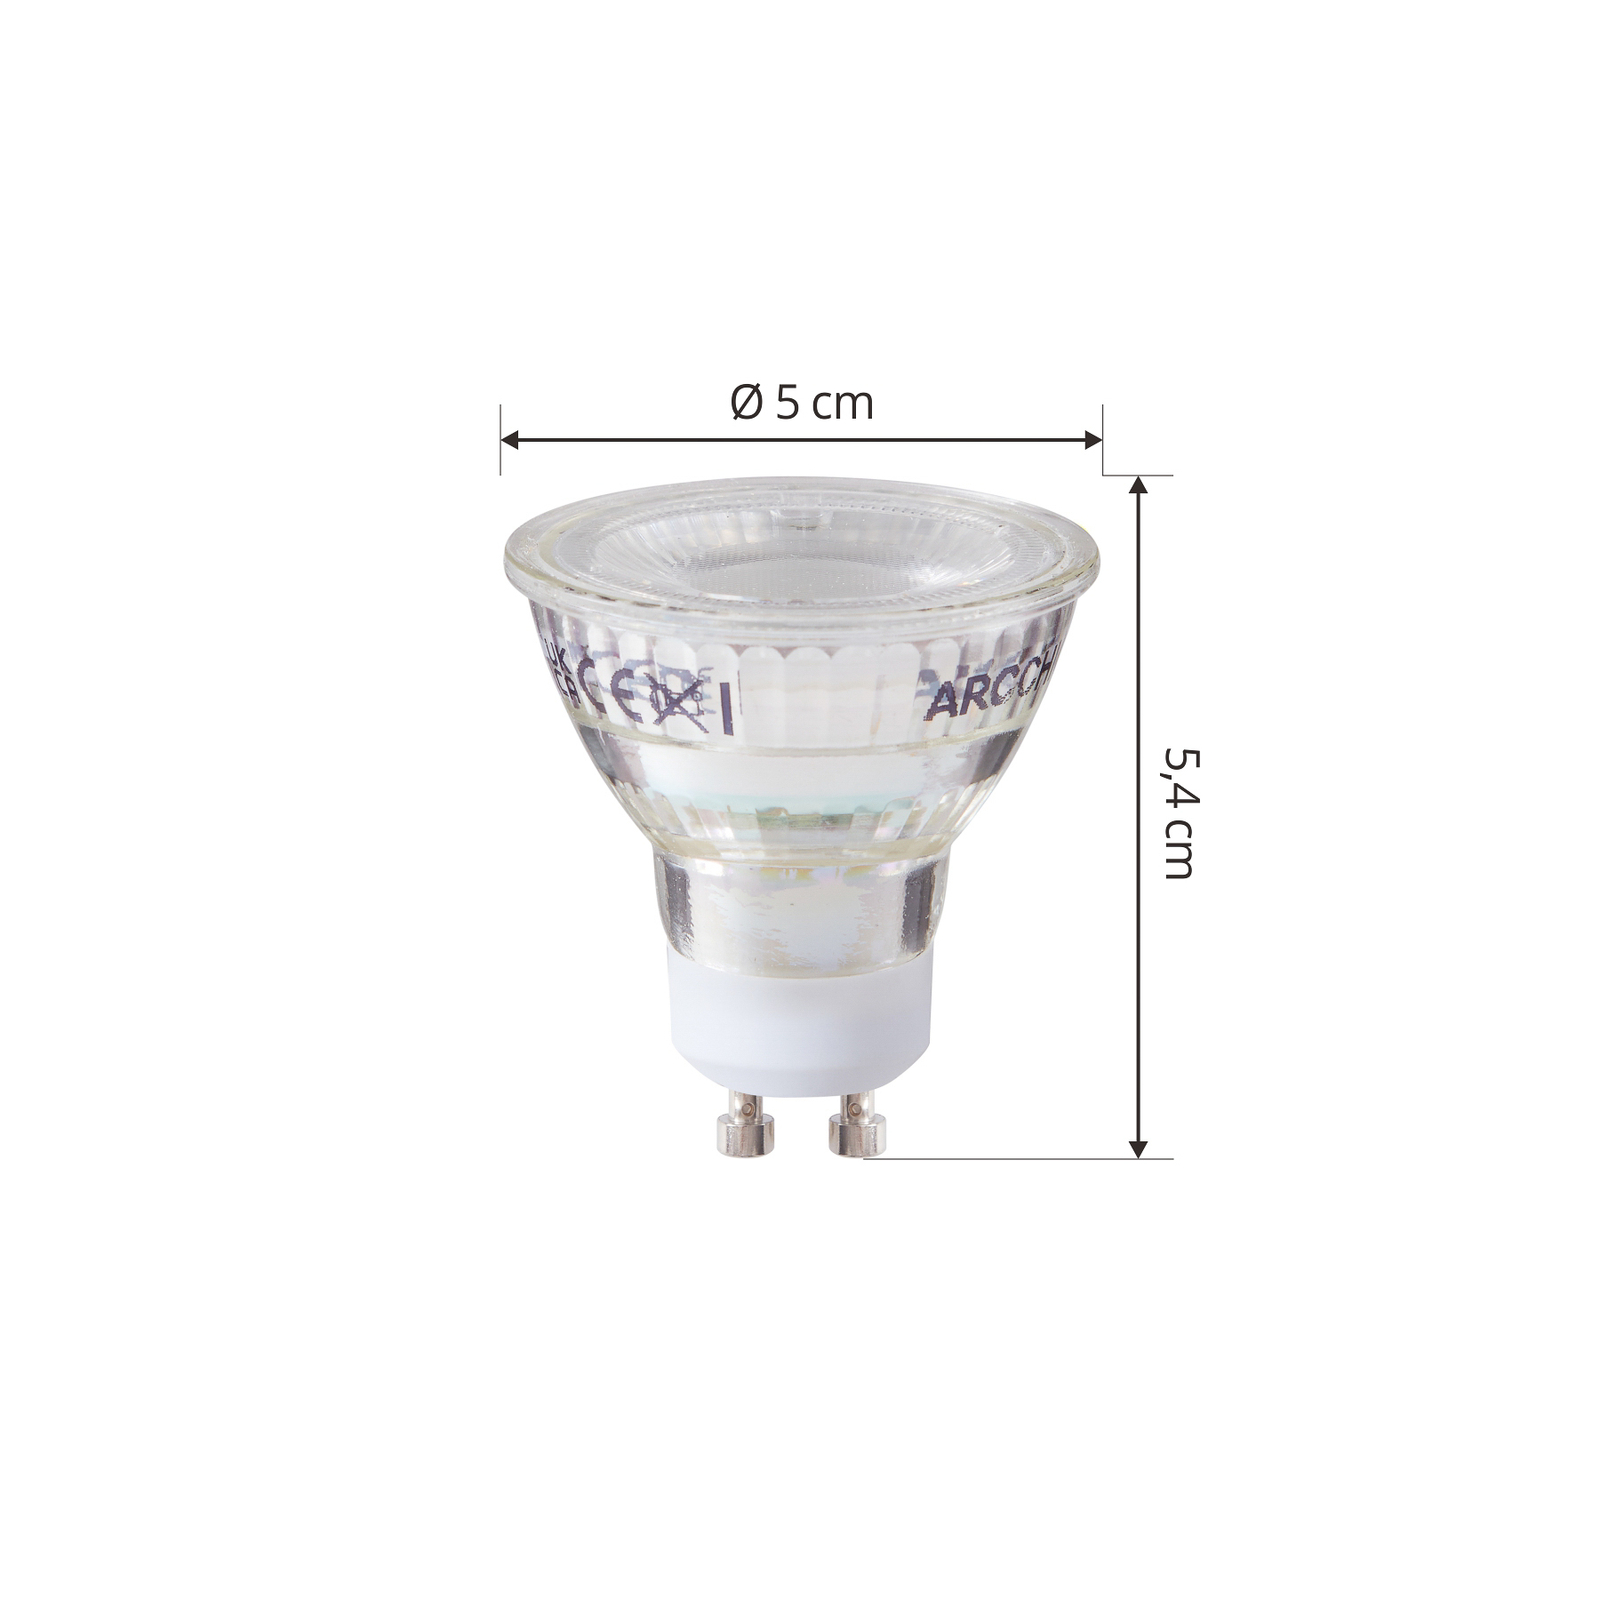 Arcchio LED bulb GU10 2.5W 6500K 450lm glass set of 3